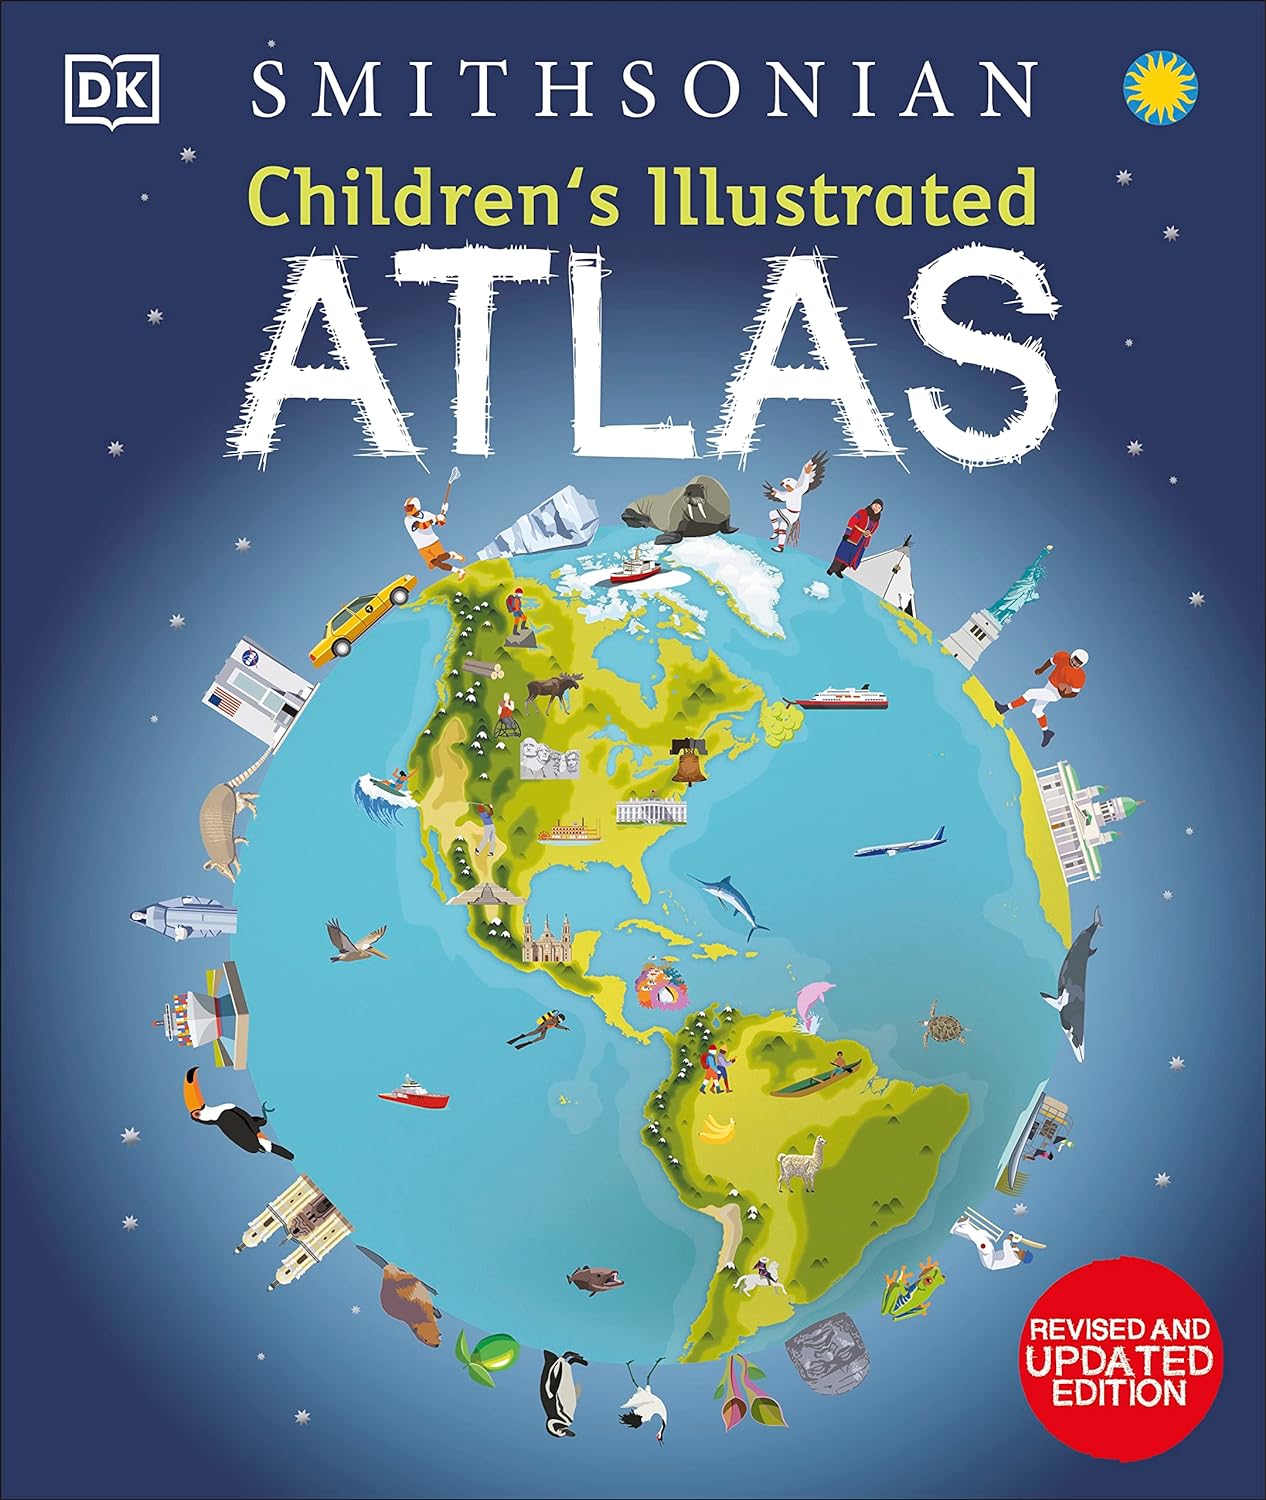 Children's Atlas